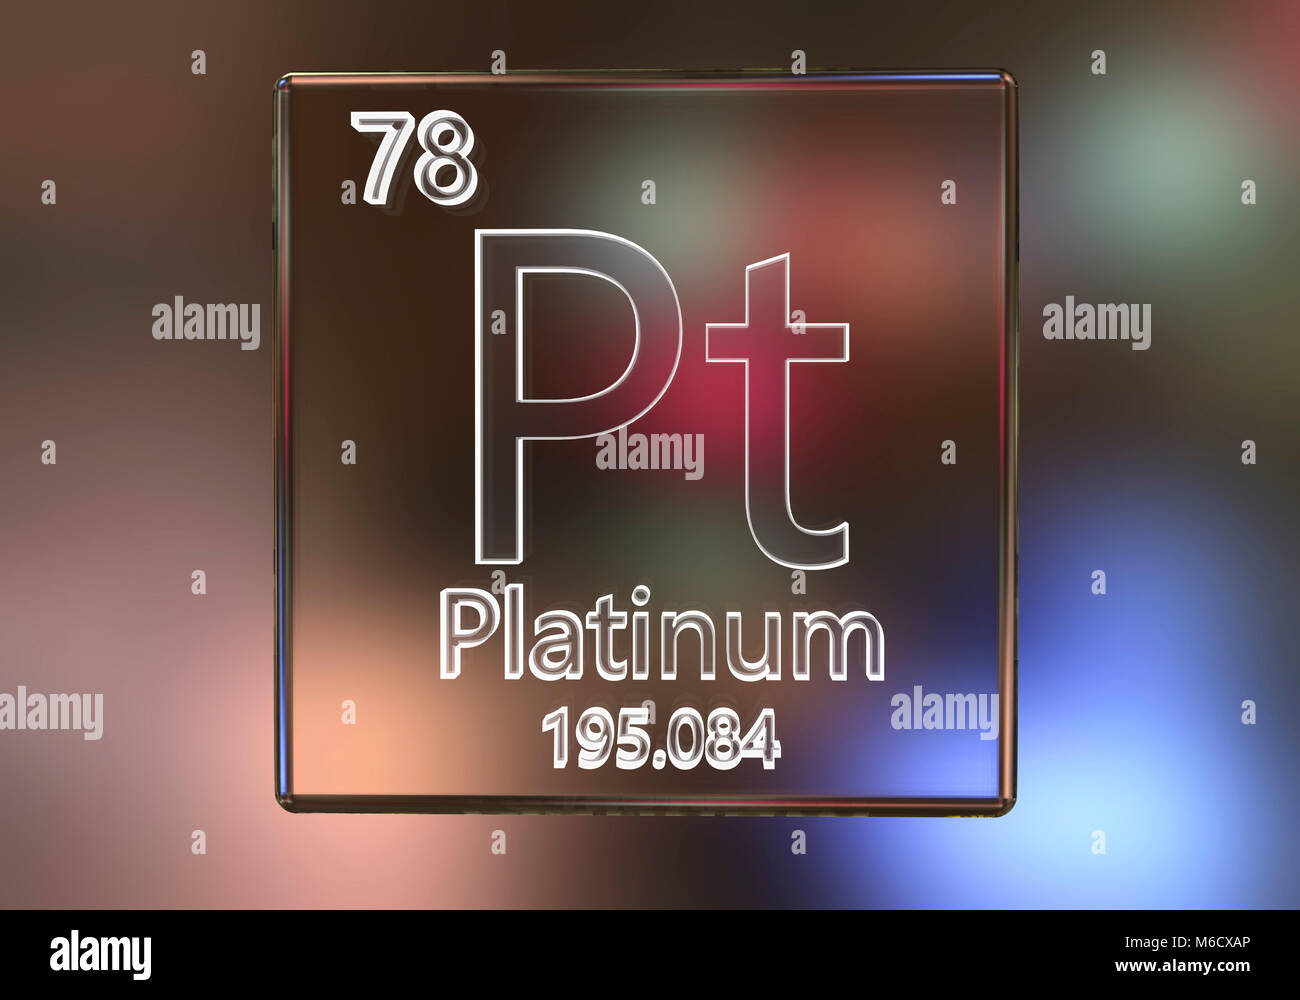 Platinum element of the periodic table, computer illustration. Stock Photo